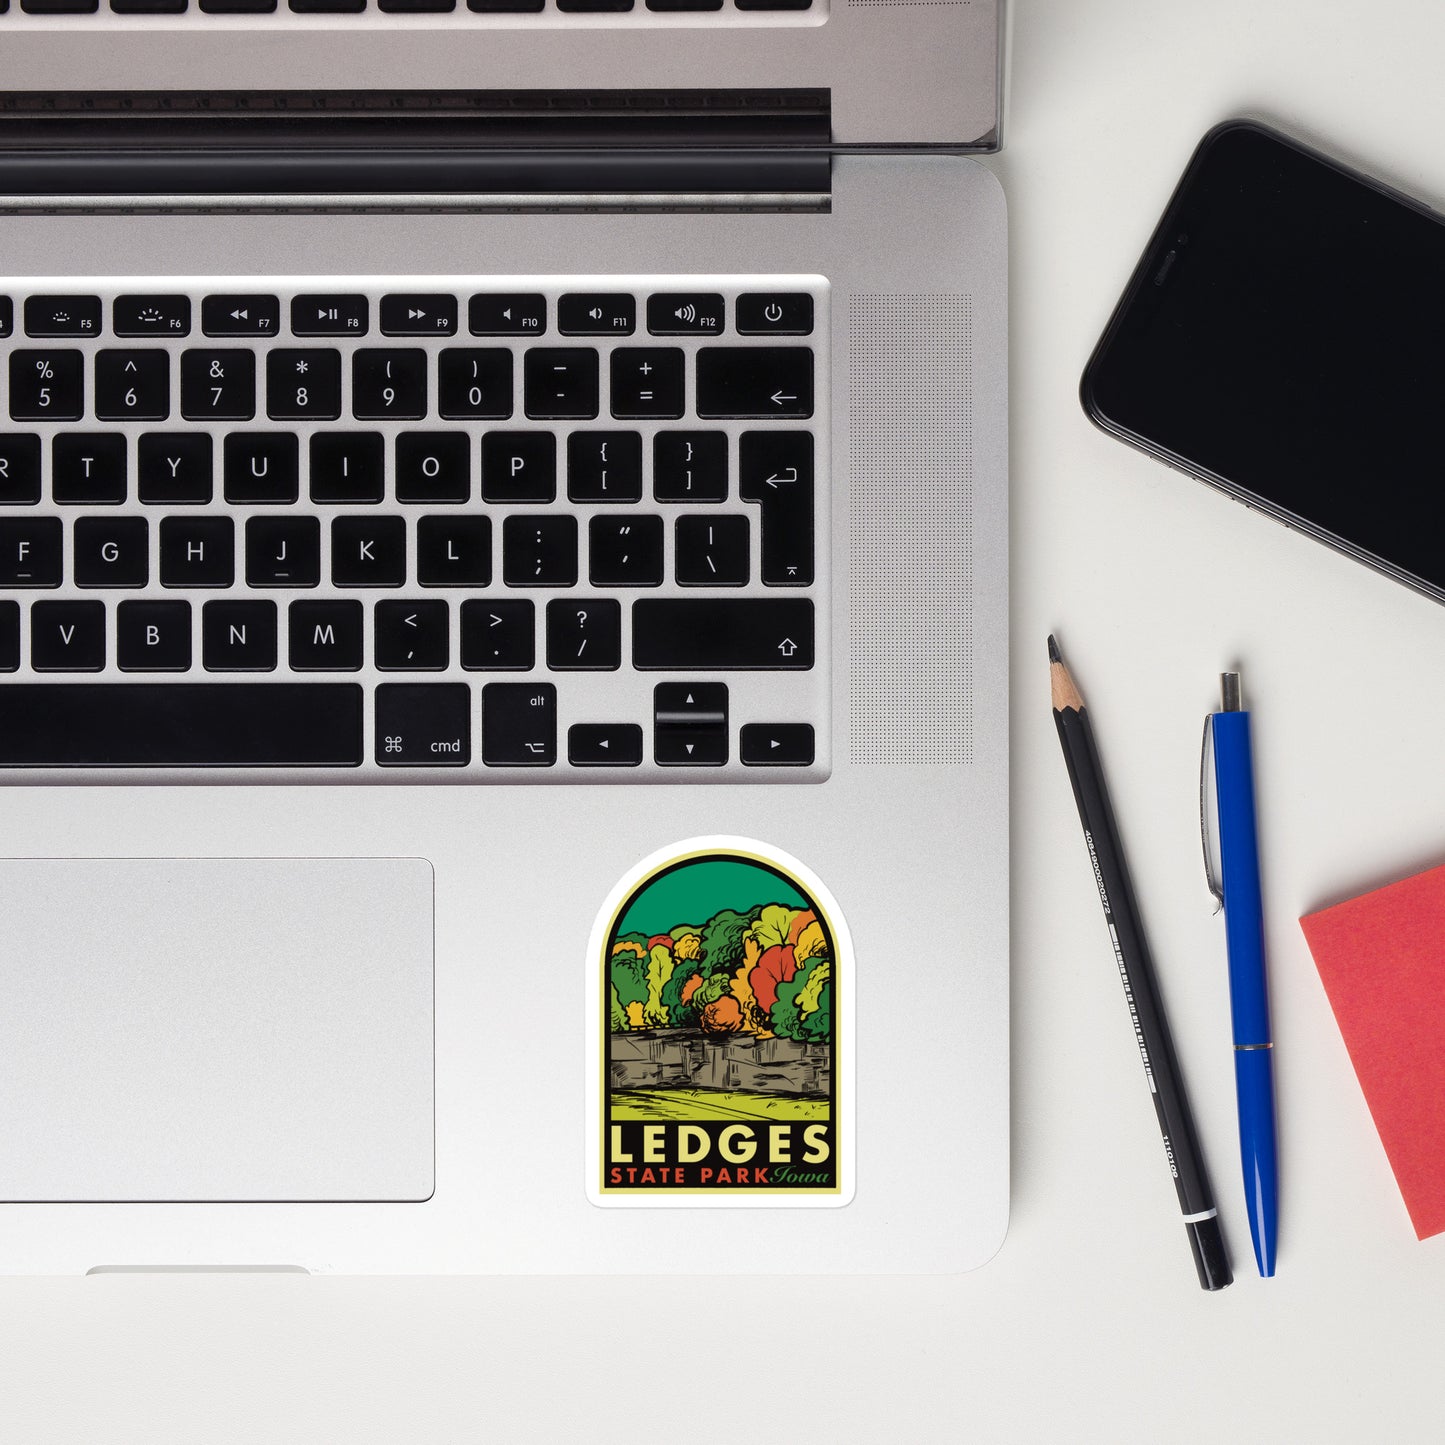 A sticker of Ledges State Park on a laptop